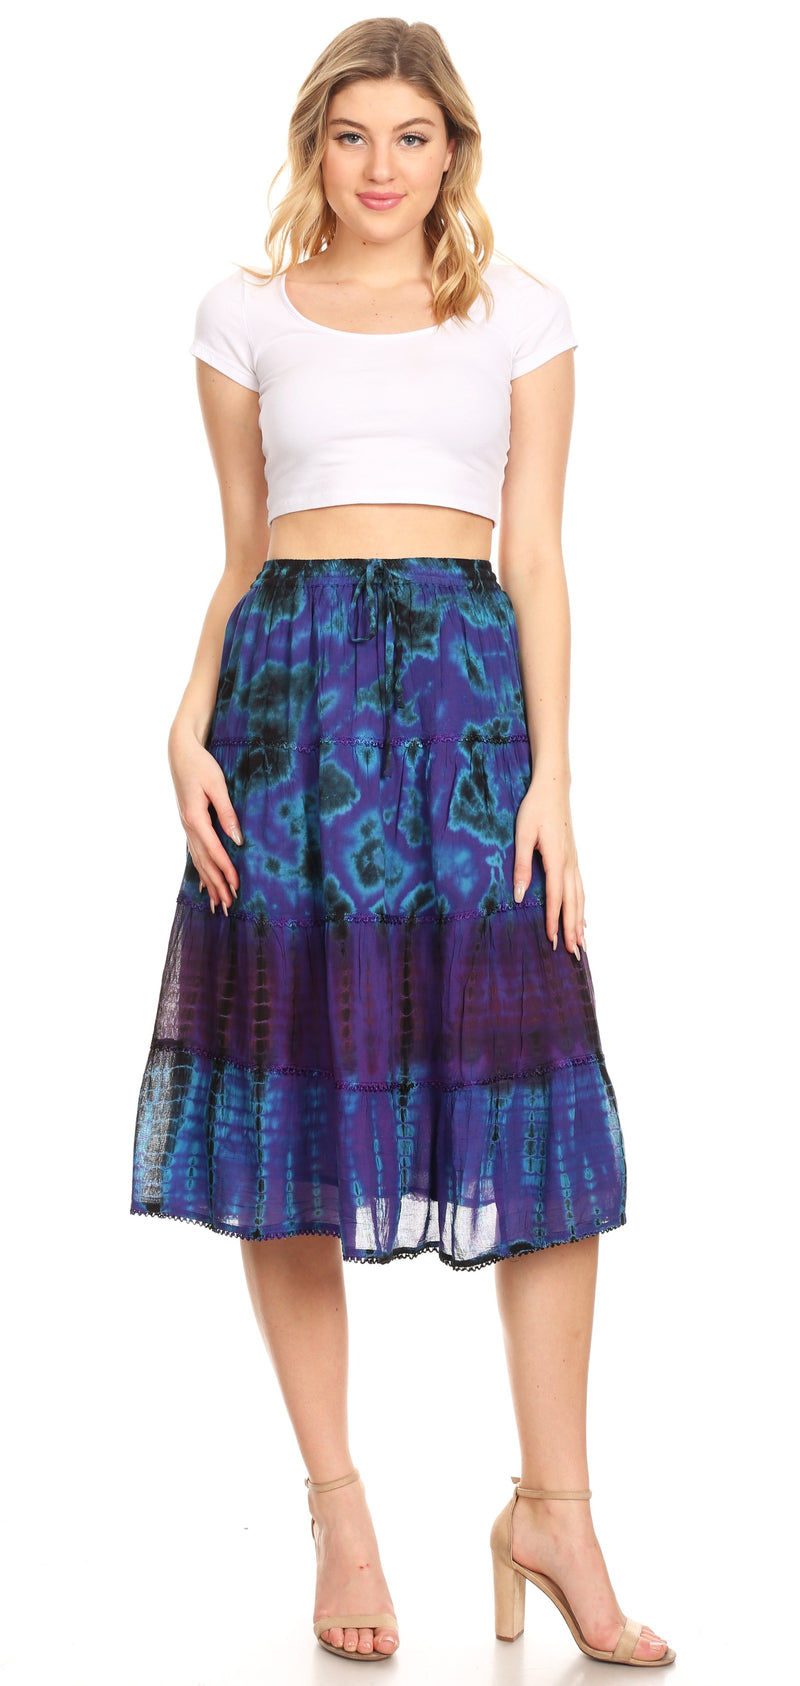 Sakkas Antonia Women's Skirt Tie Dye Boho Elastic Waist Adjustable Embroidery